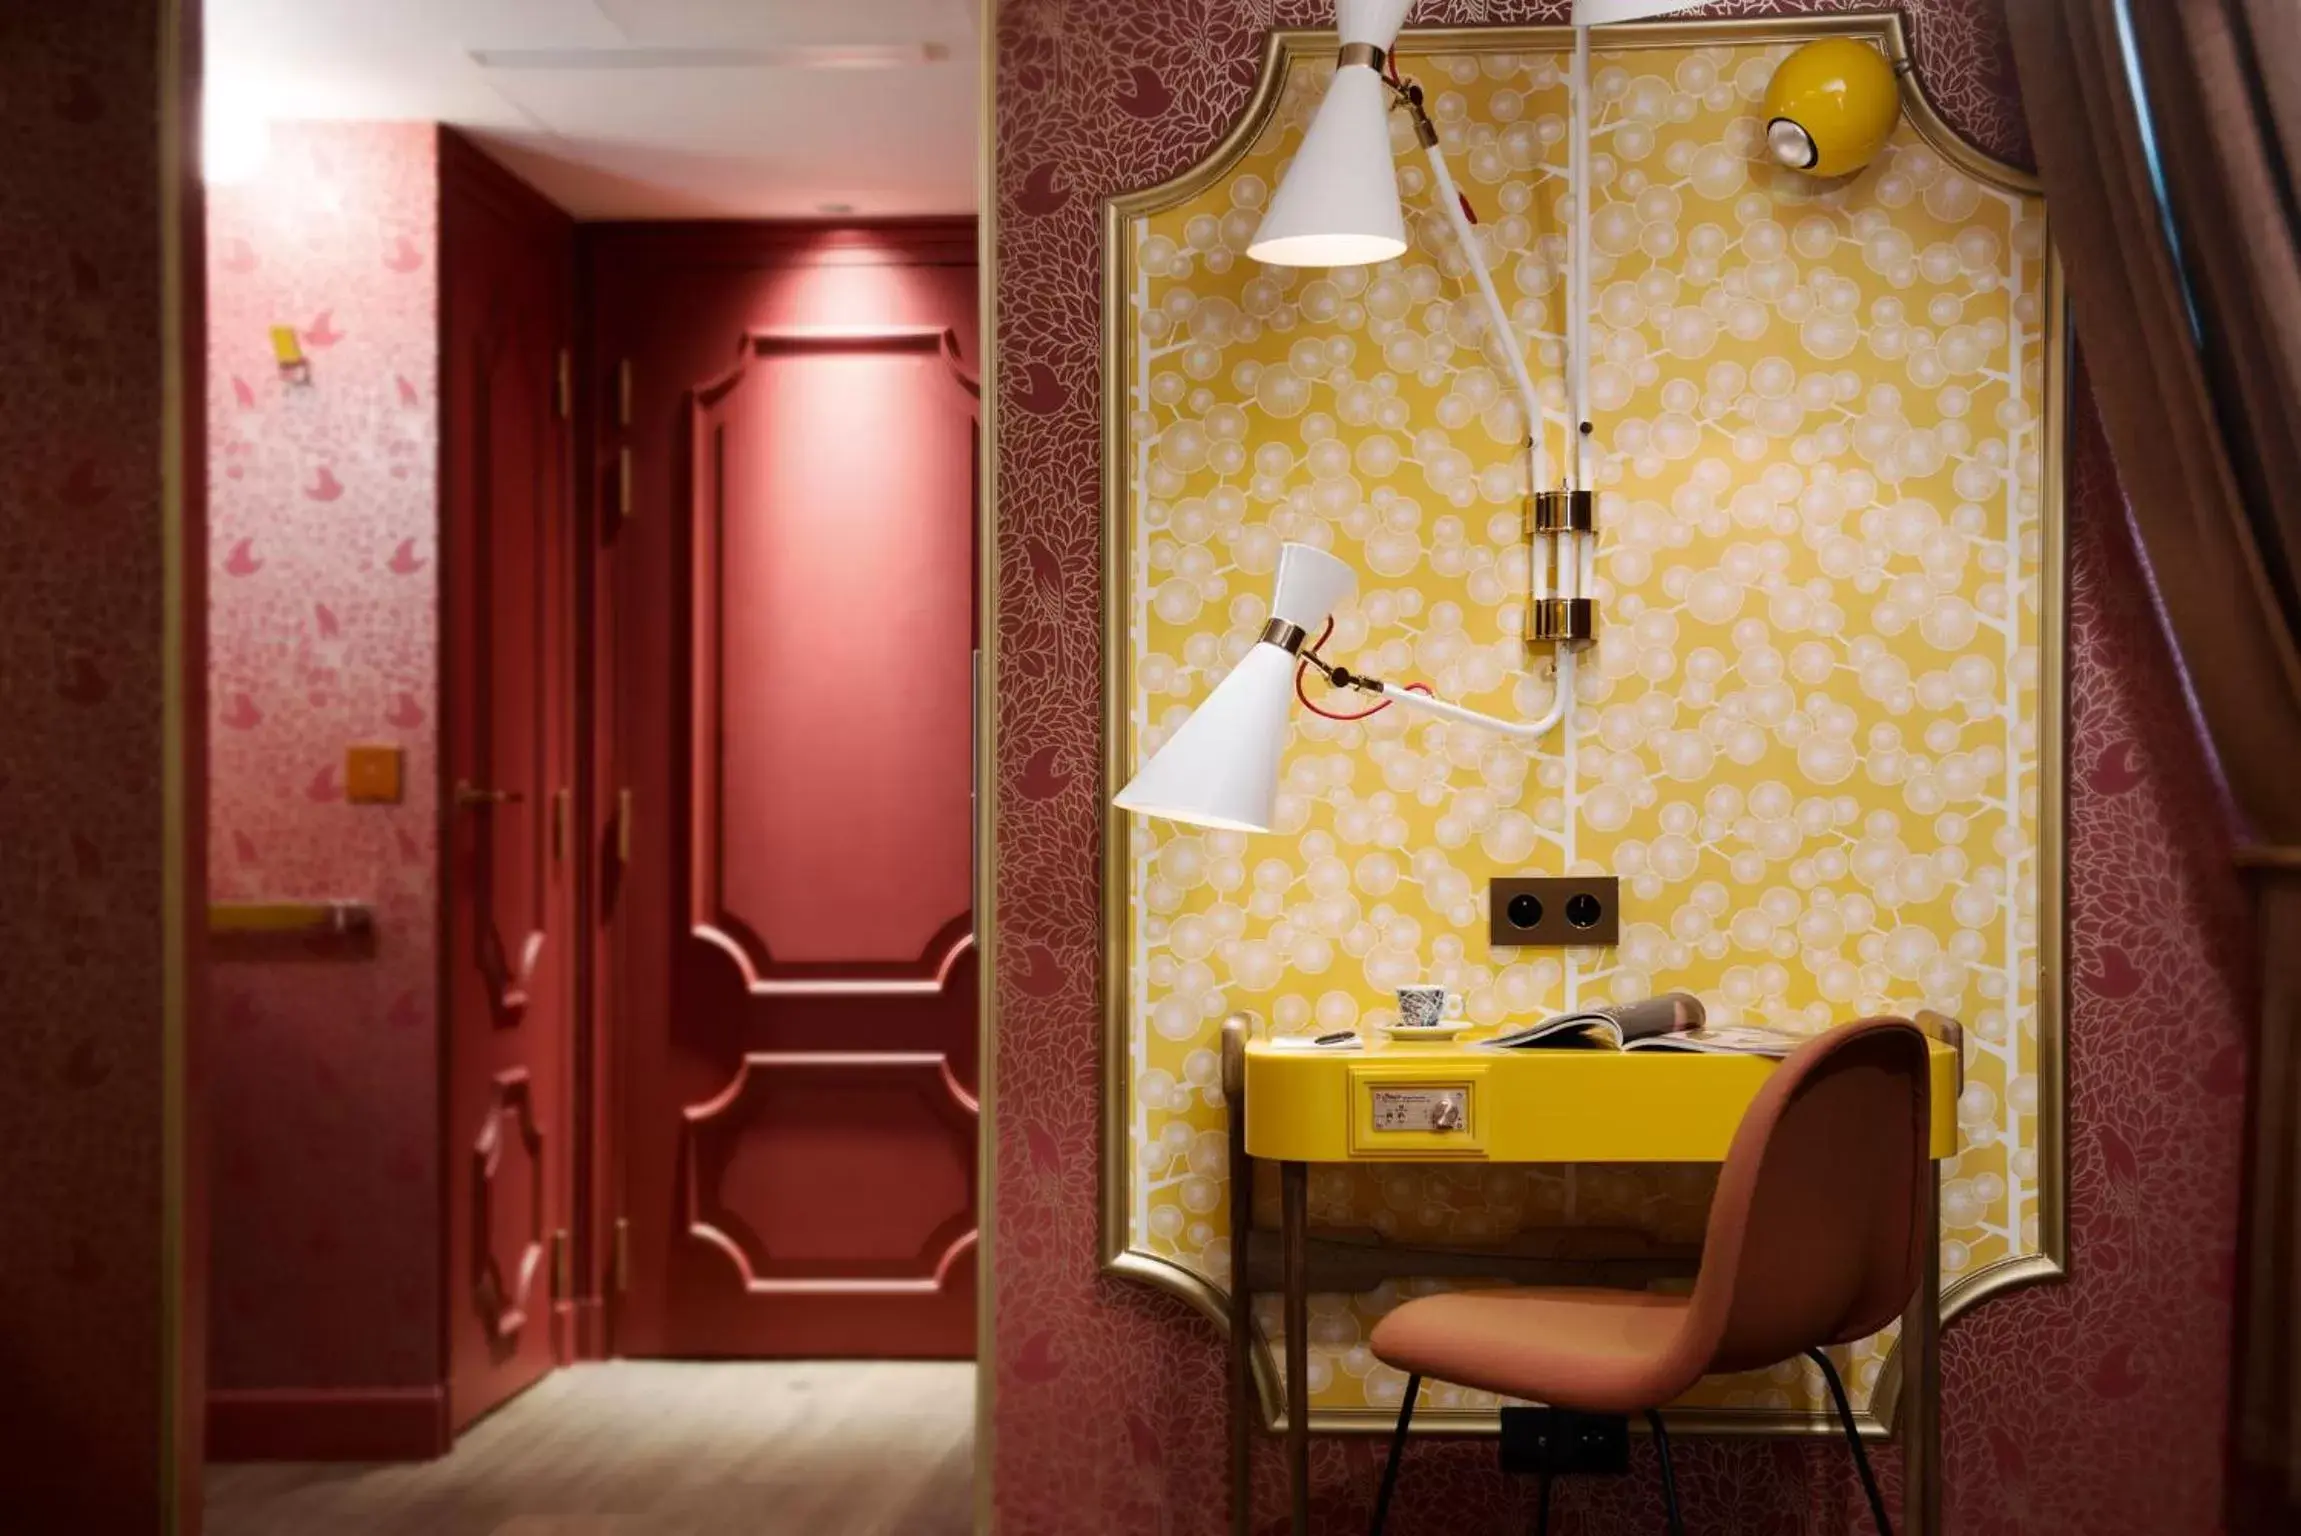 Photo of the whole room, Bathroom in Idol Hotel